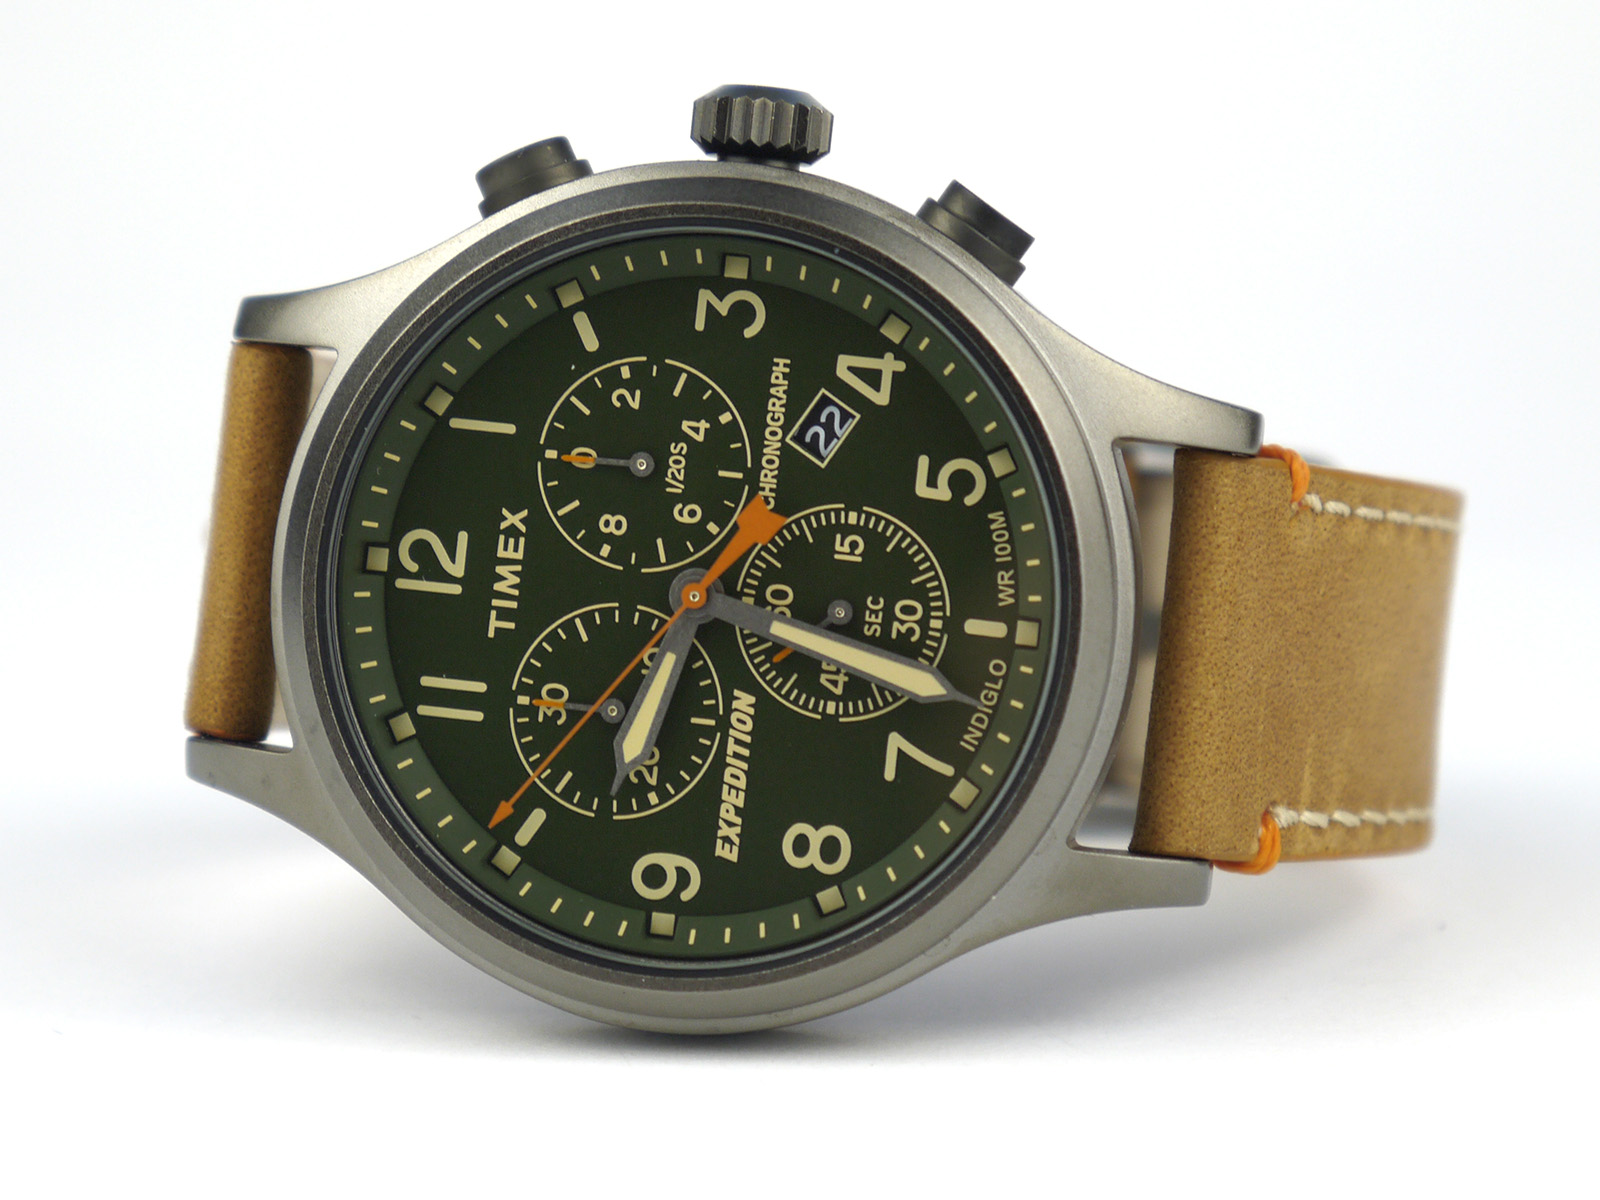 Timex TW4B04400 Expedition Scout Chronograph Analog Quartz Watch